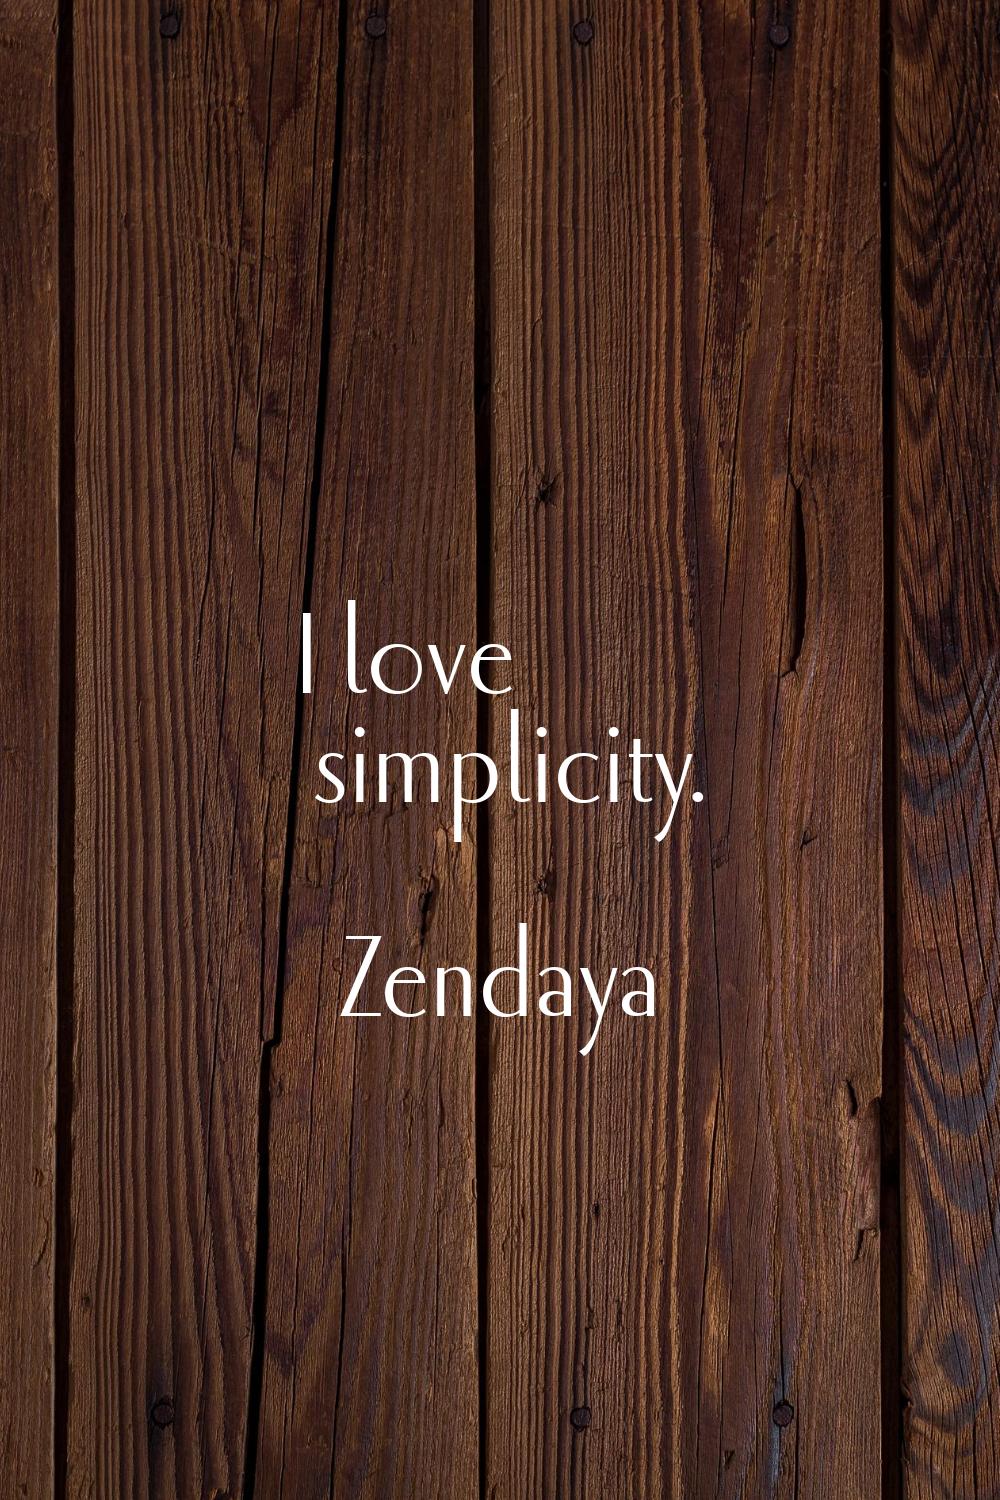 I love simplicity.